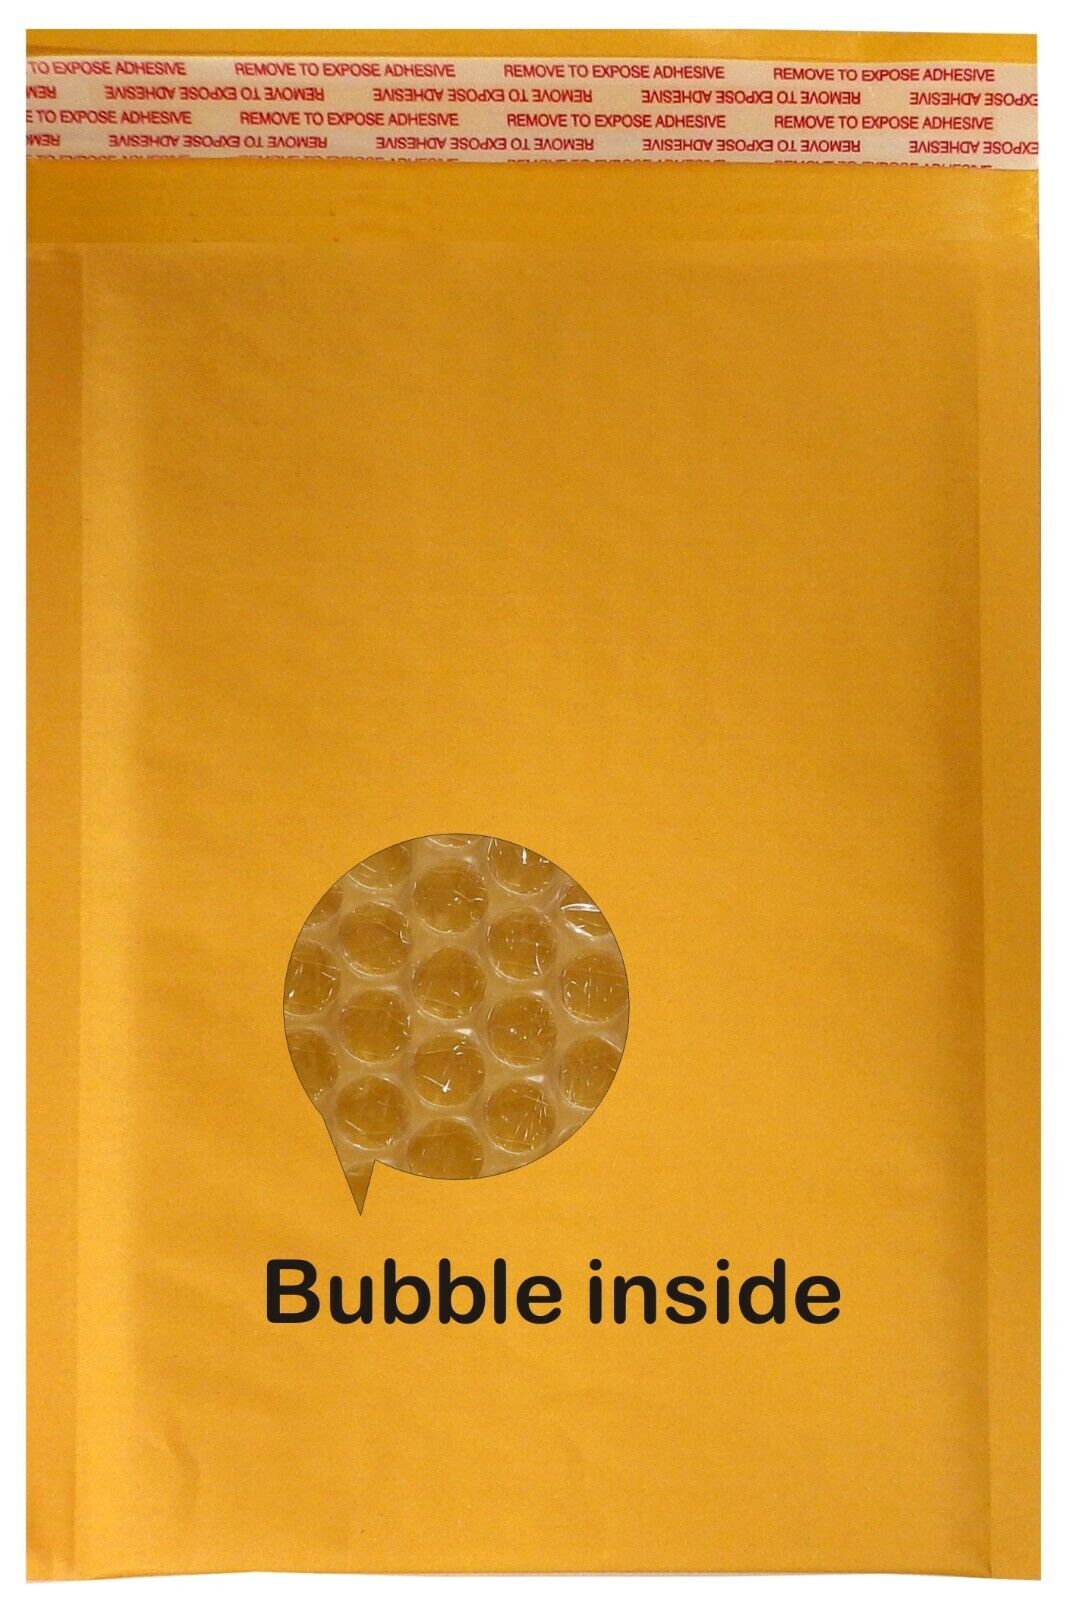 PolycyberUSA  200 #1 Kraft Bubble Envelopes Mailers  (Inner 7.25x11)